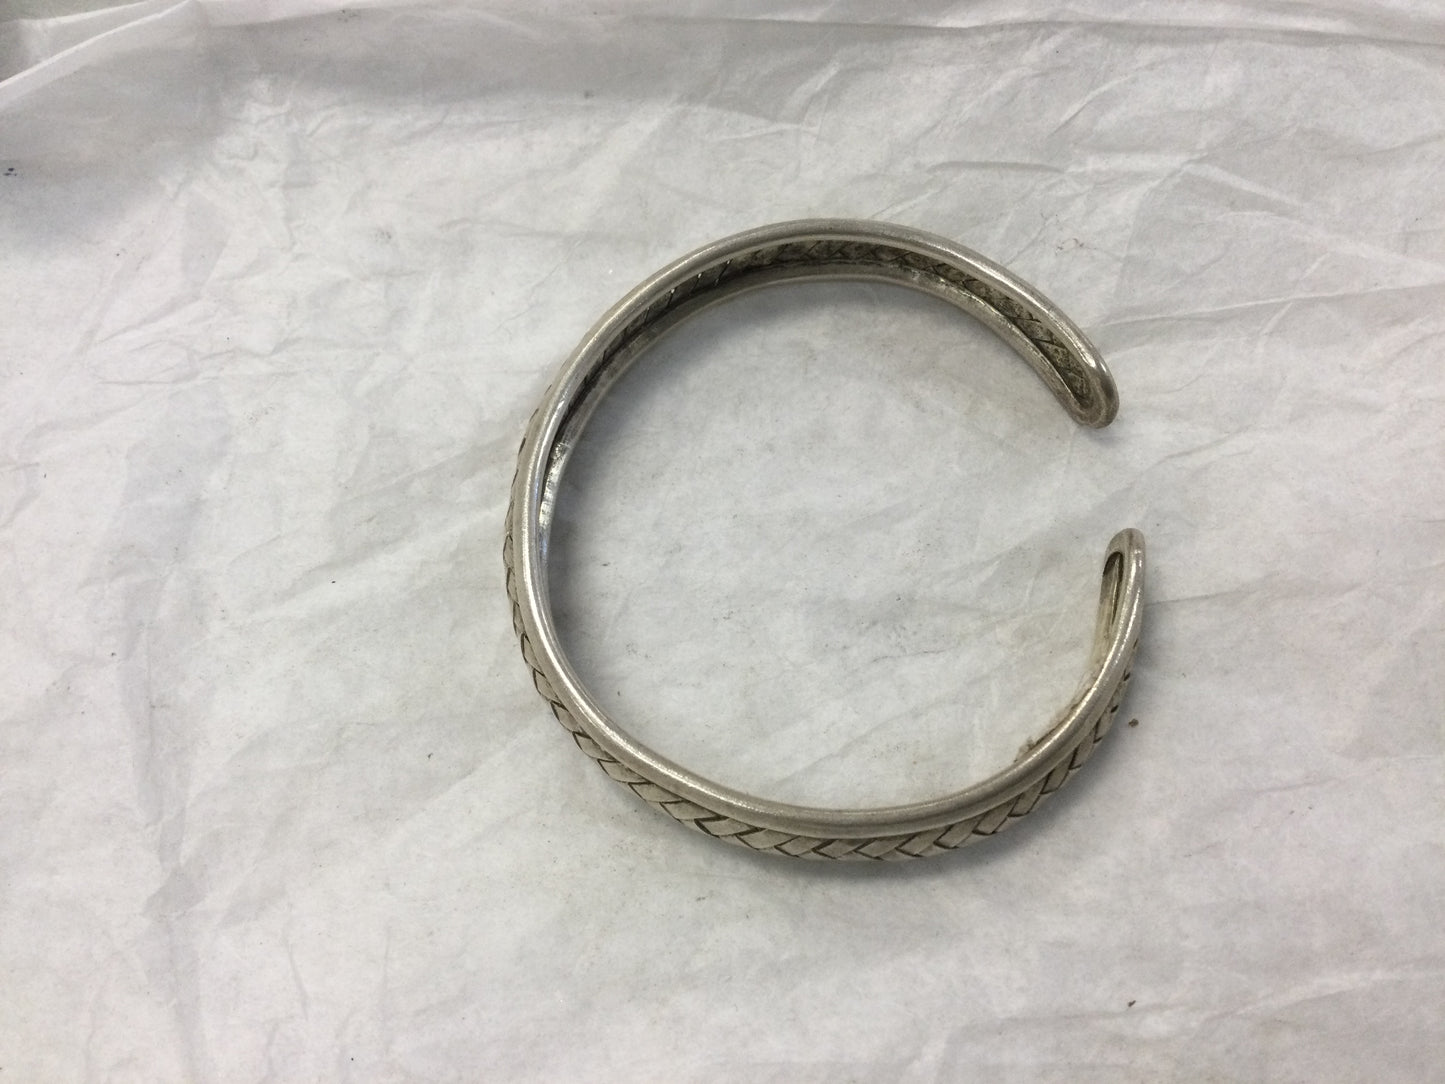 Silver Cuff Bracelet with Braid Design